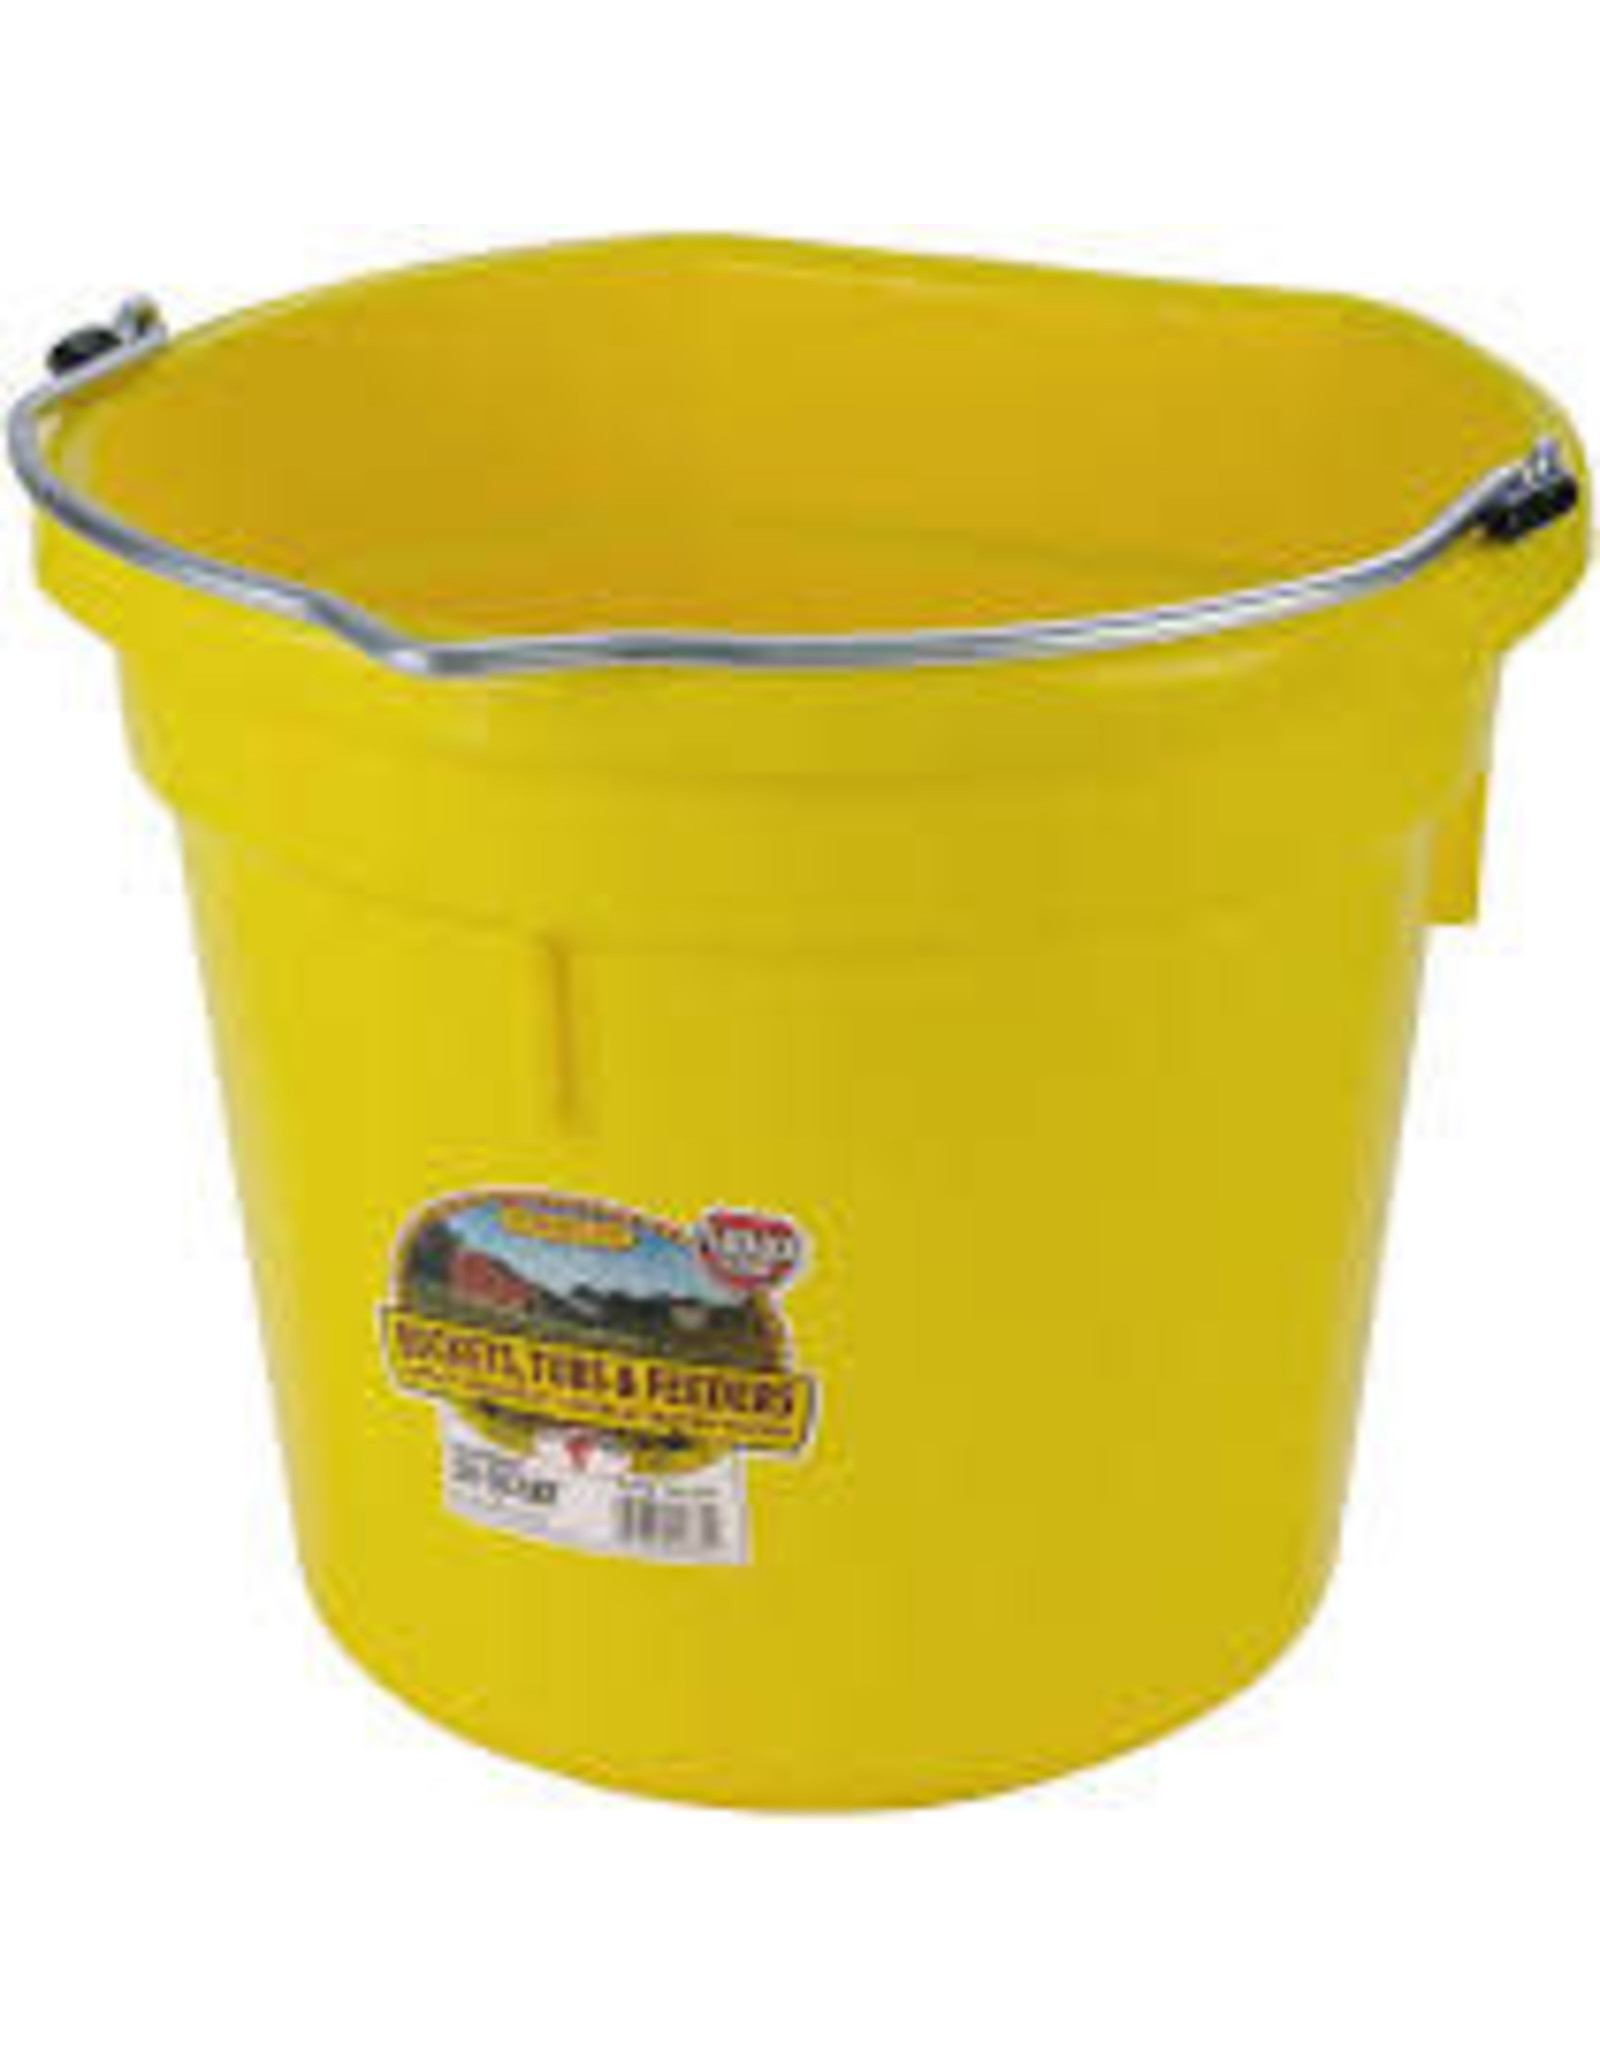 Pail 8qt Plastic Flat Back Bucket - Yellow - 115-488